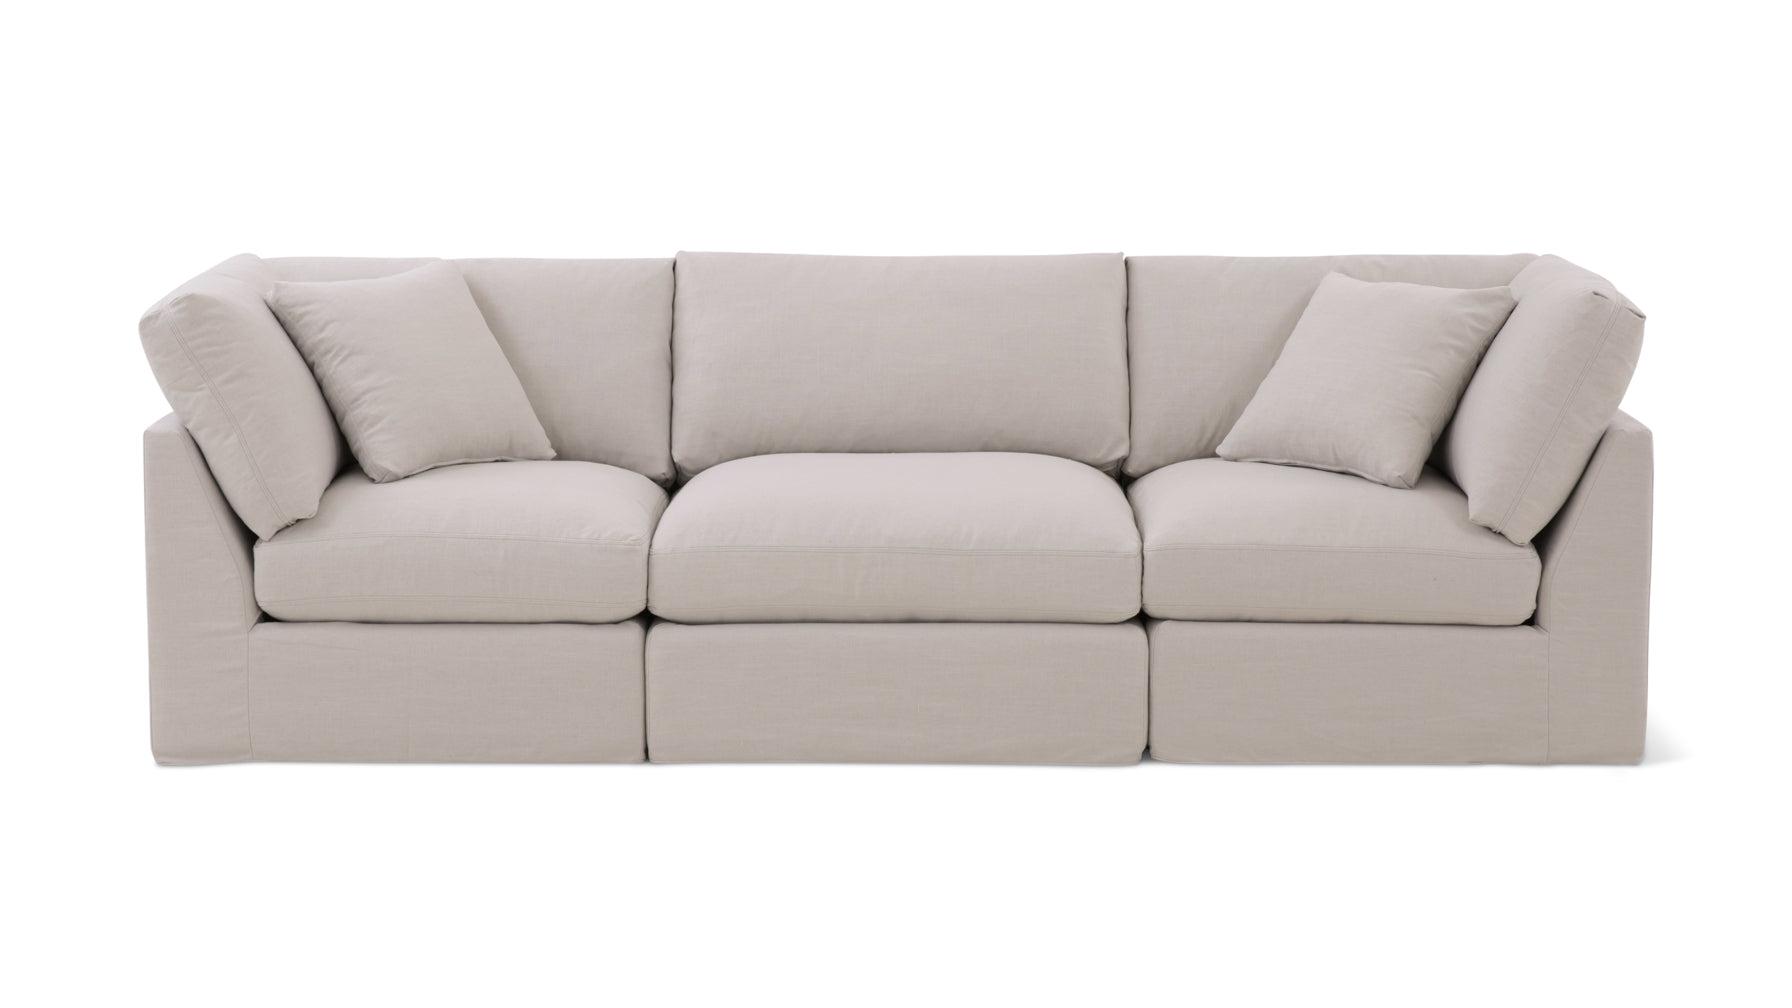 Get Together™ 3-Piece Modular Sofa, Standard, Clay - Image 1